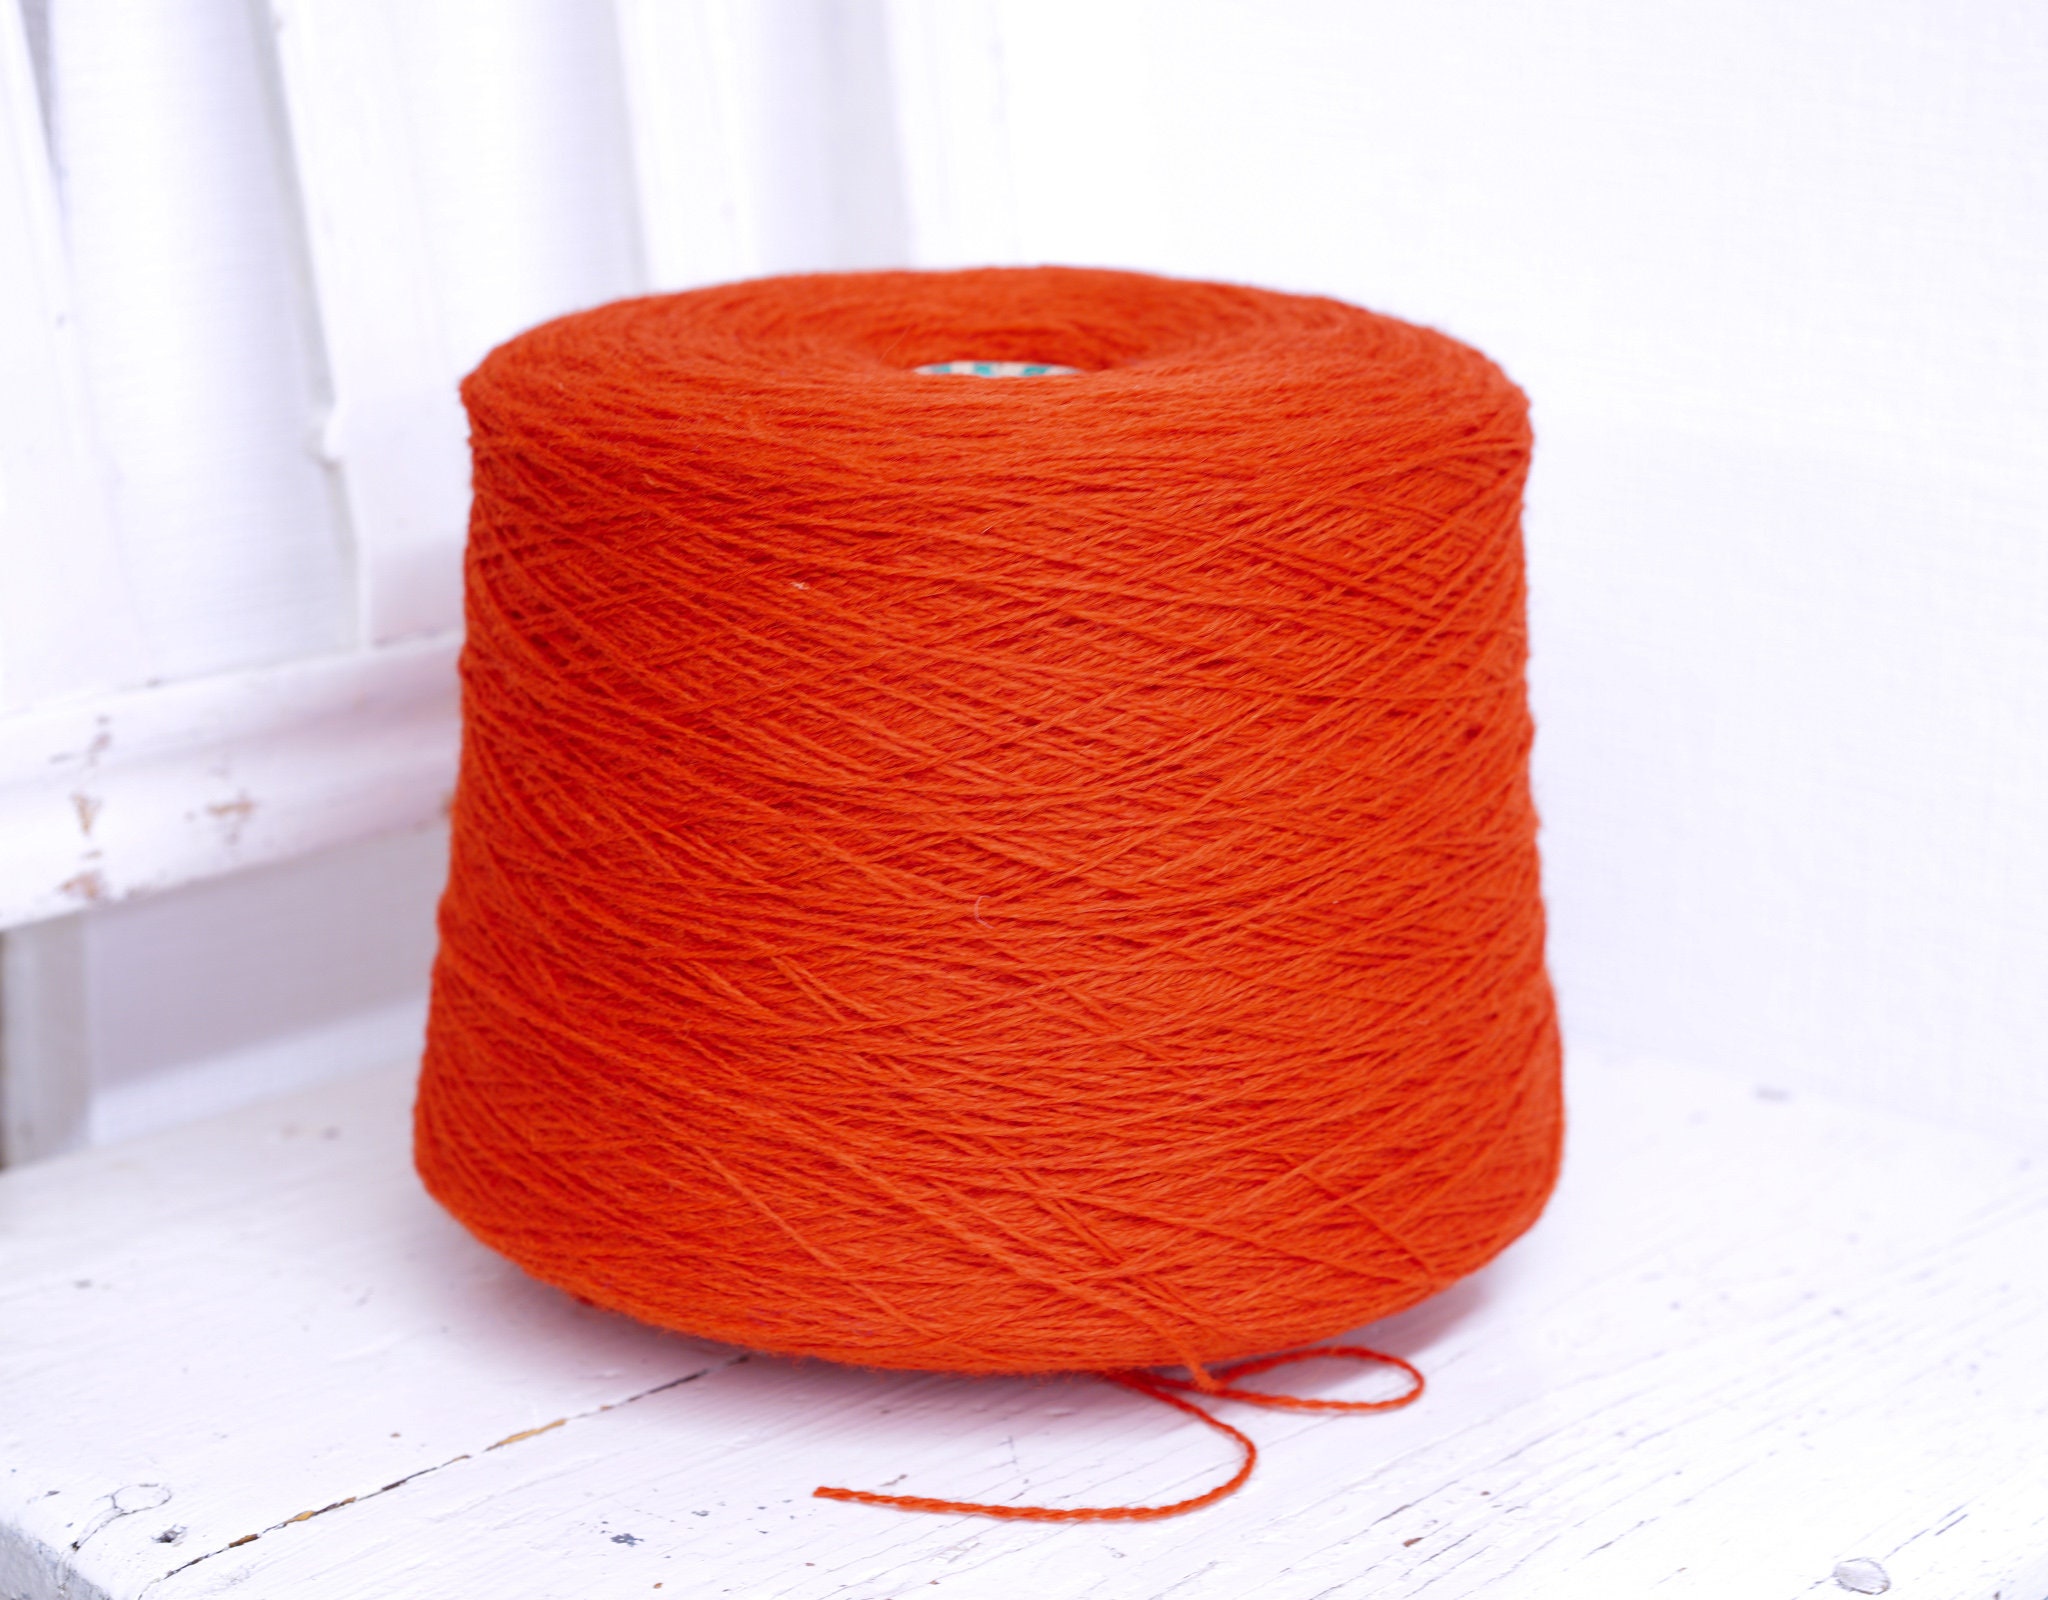 Scarlet Red Wool in Cone 09kg/31.7oz Fingering - Etsy